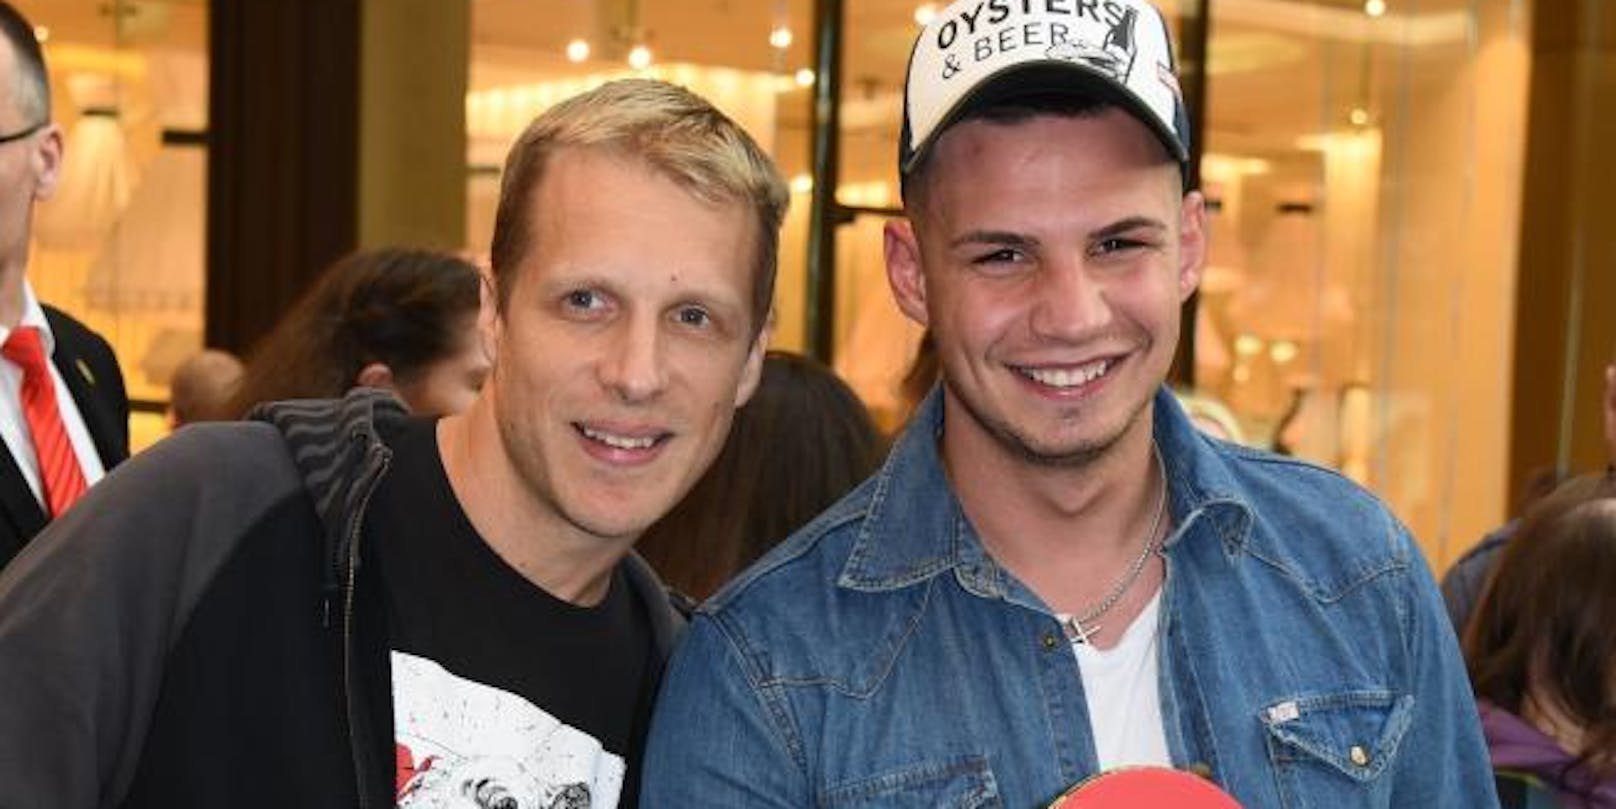 Oliver Pocher und Pietro Lombardi beim Promi-Charity-Event "Lass uns Lachen" in der Mall of Berlin am 18.03.2017